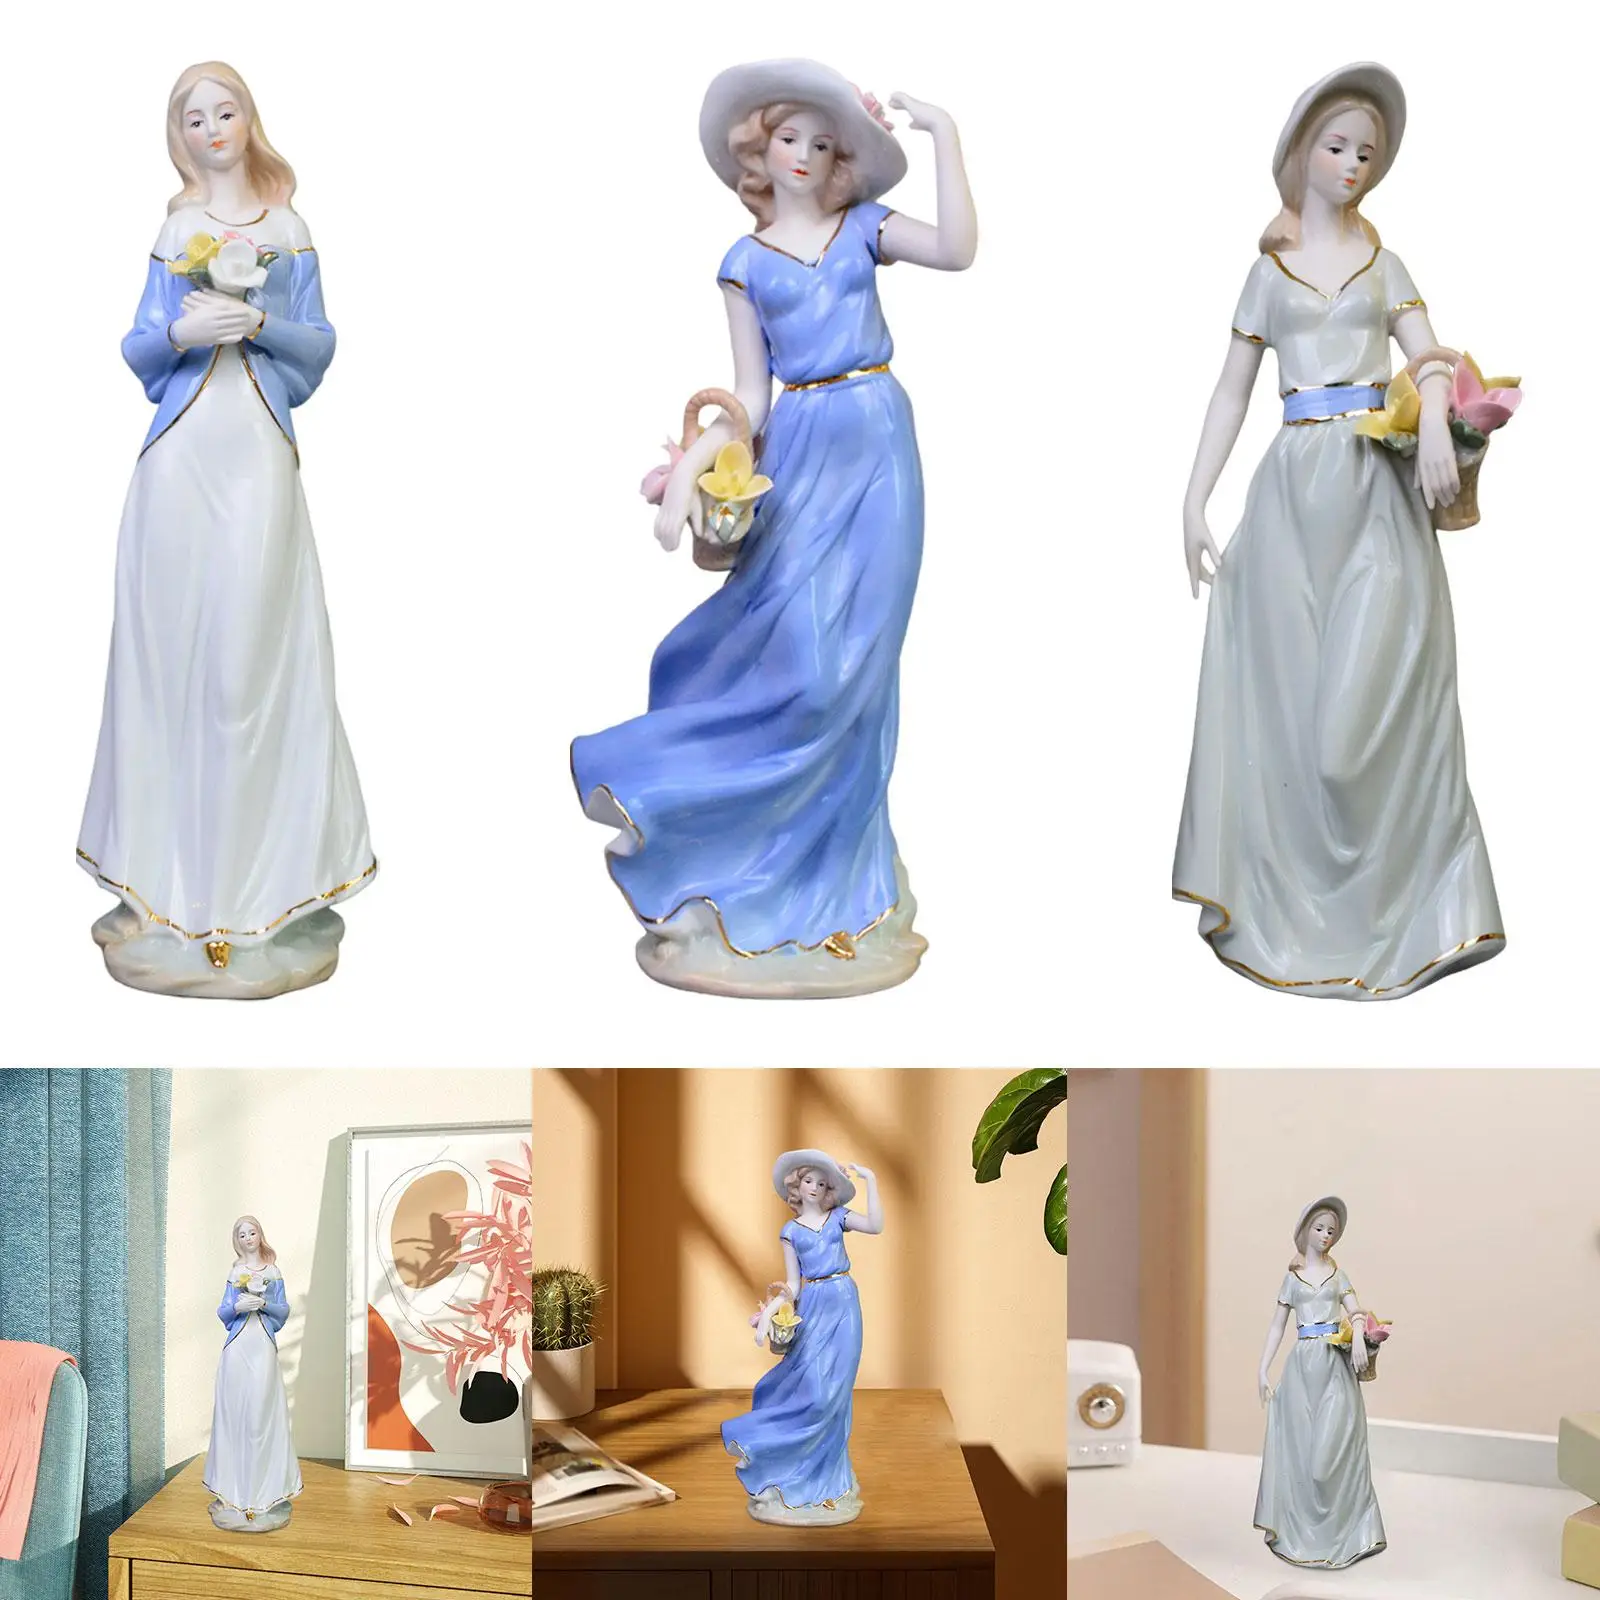 Girl Figurine Porcelain Figure Cute Modern Art Figurine Decorative Porcelain Figurine Home Decor for Office Tabletop Bookcase